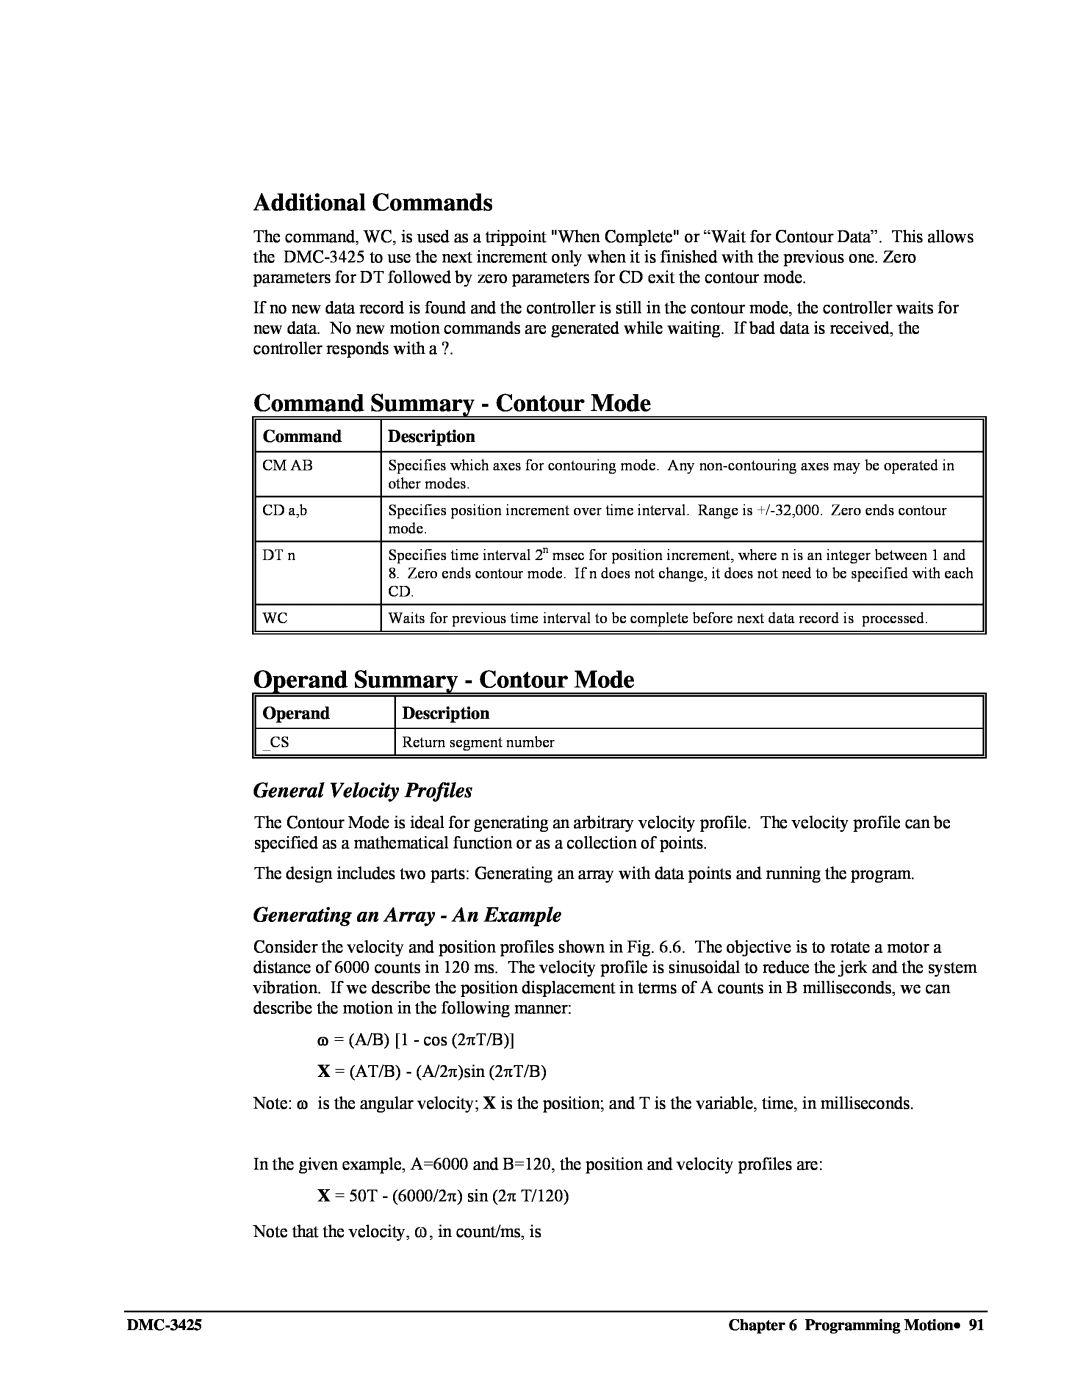 Galil DMC-3425 user manual Command Summary - Contour Mode, Operand Summary - Contour Mode, General Velocity Profiles 